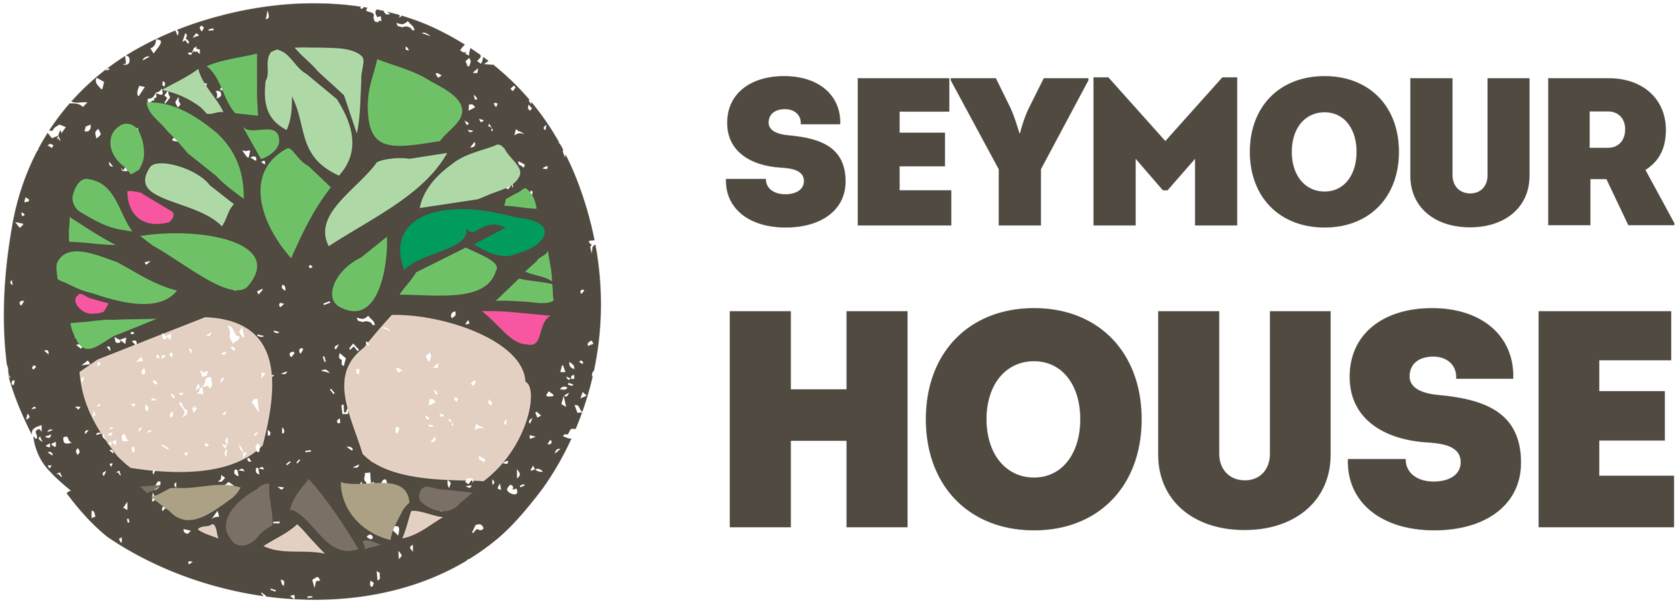 Seymour HouseSchool логотип